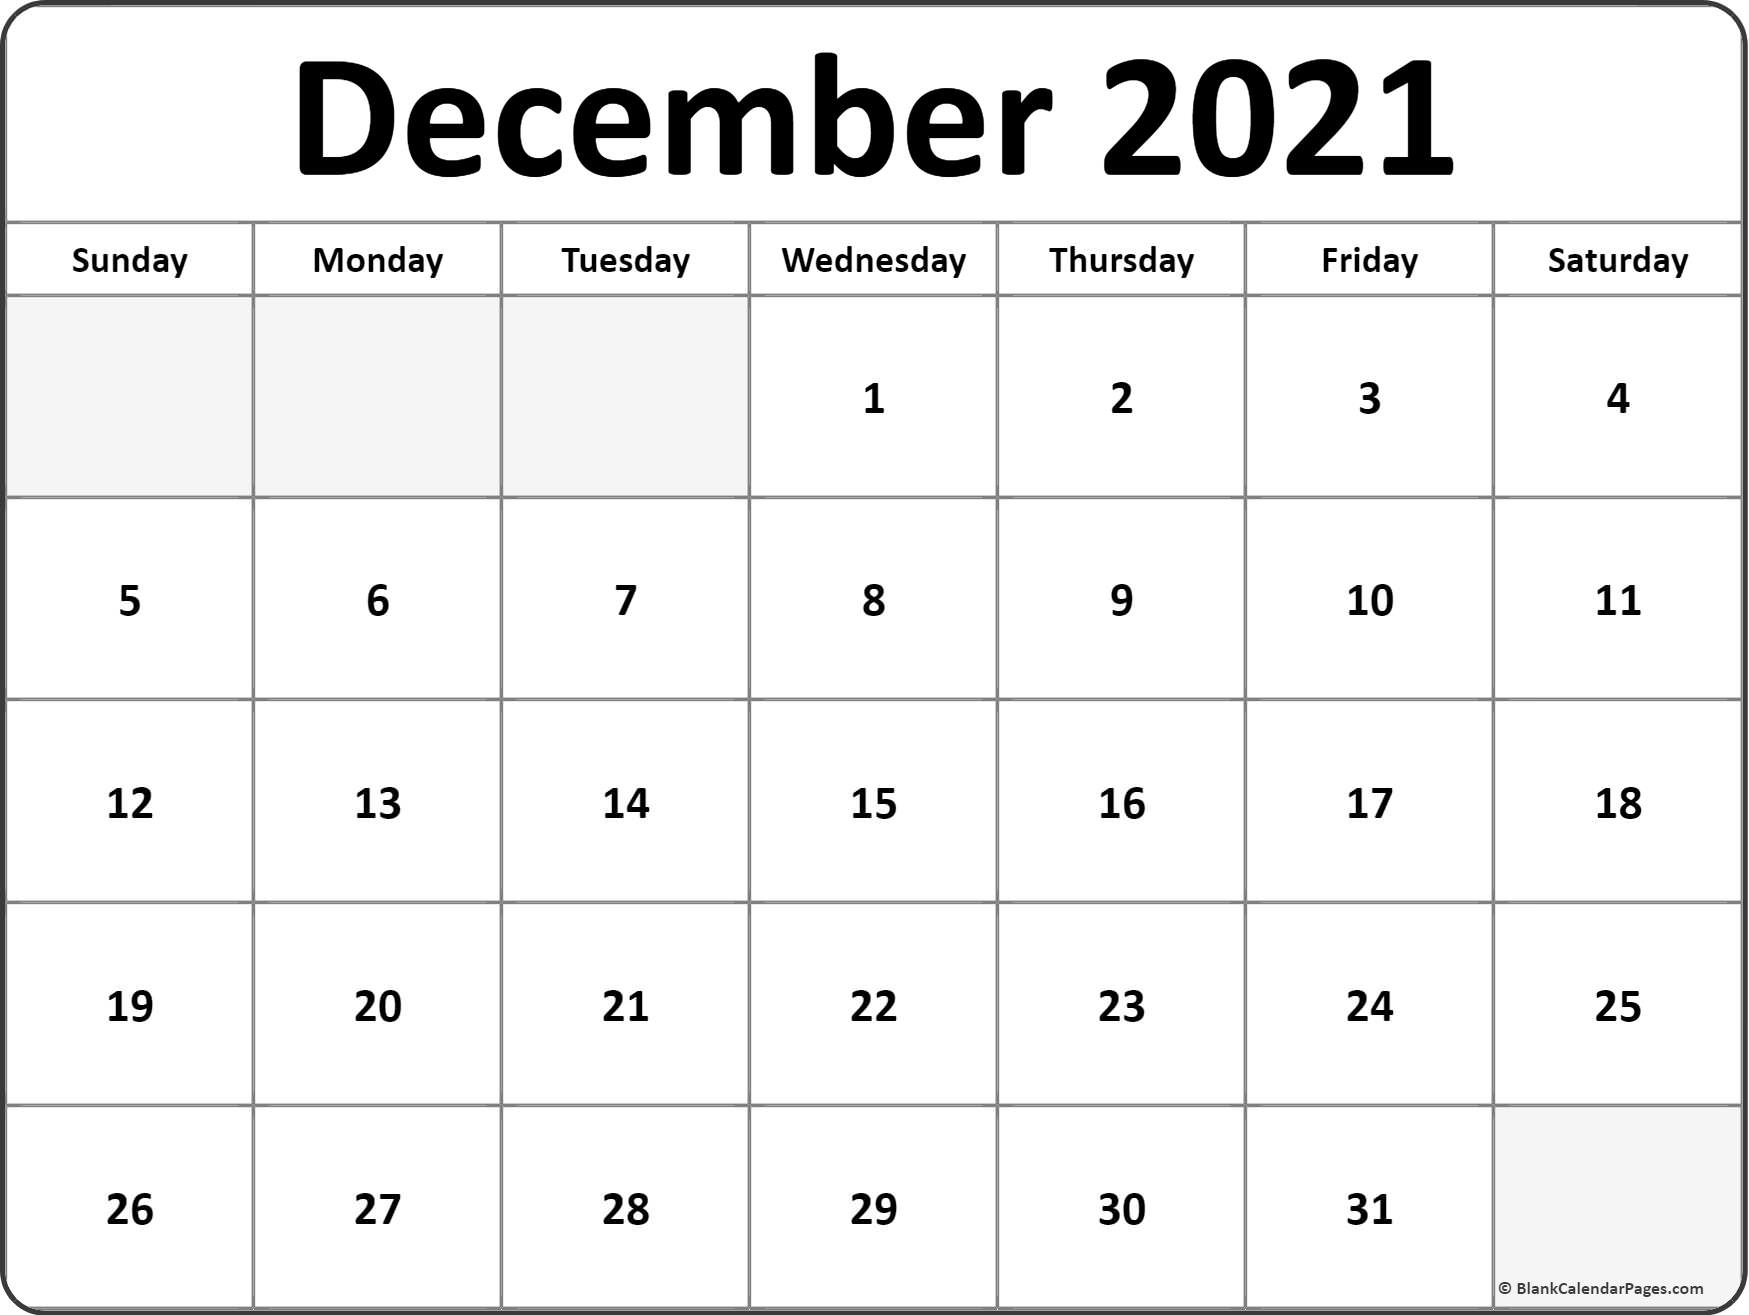 December 2021 Blank Calendar Templates